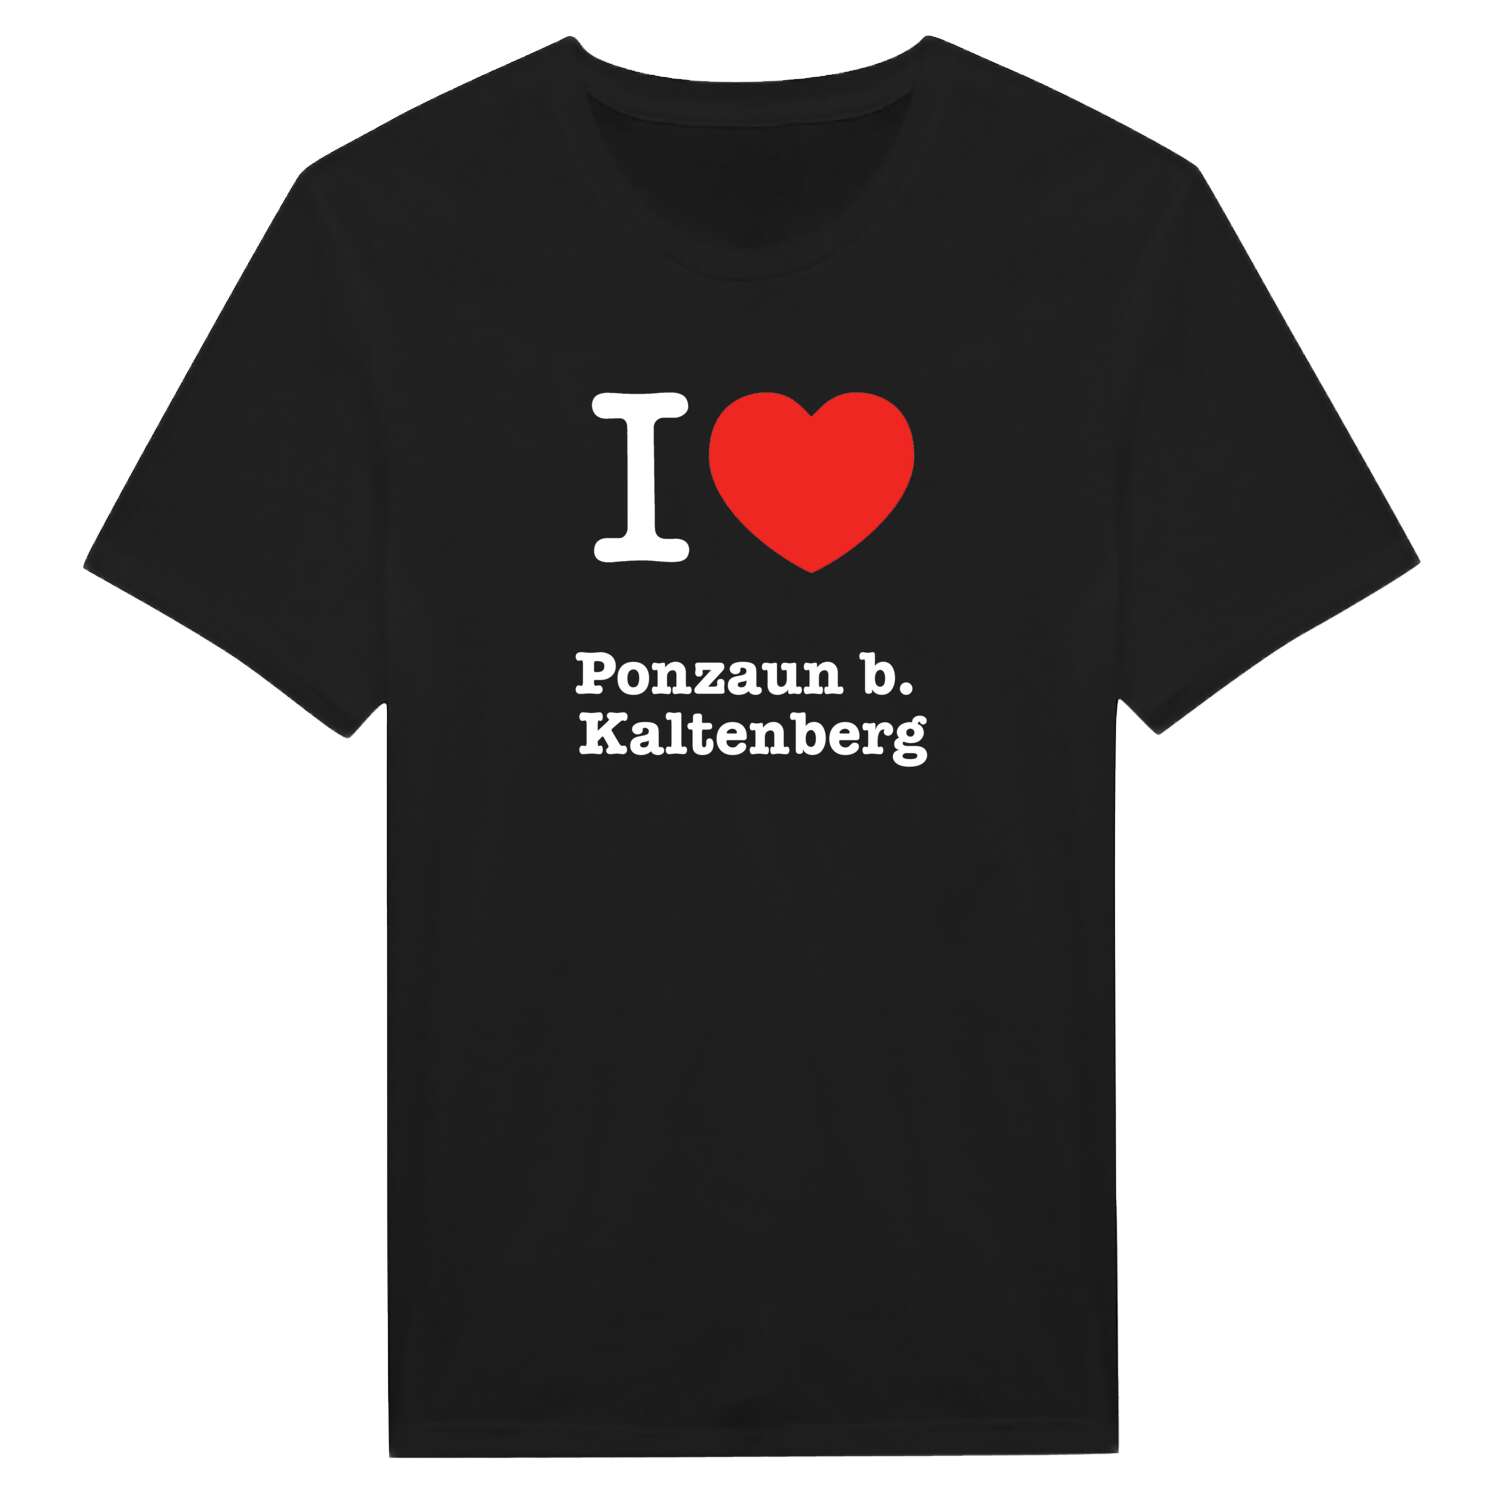 Ponzaun b. Kaltenberg T-Shirt »I love«